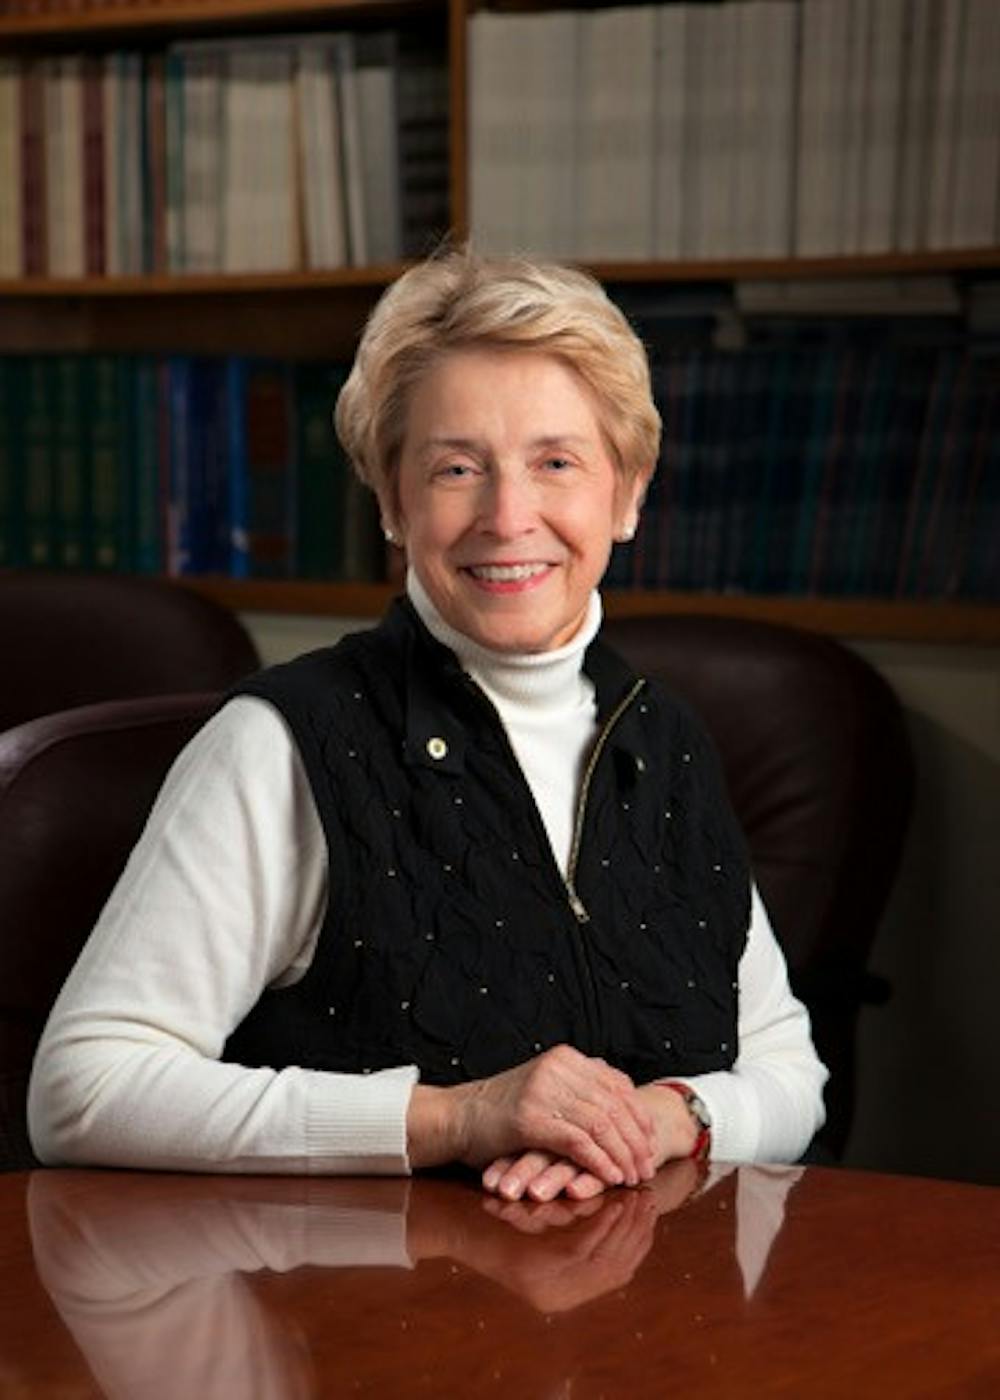 The new dean for the Mercer School of Medicine is Dr. Jean Sumner.